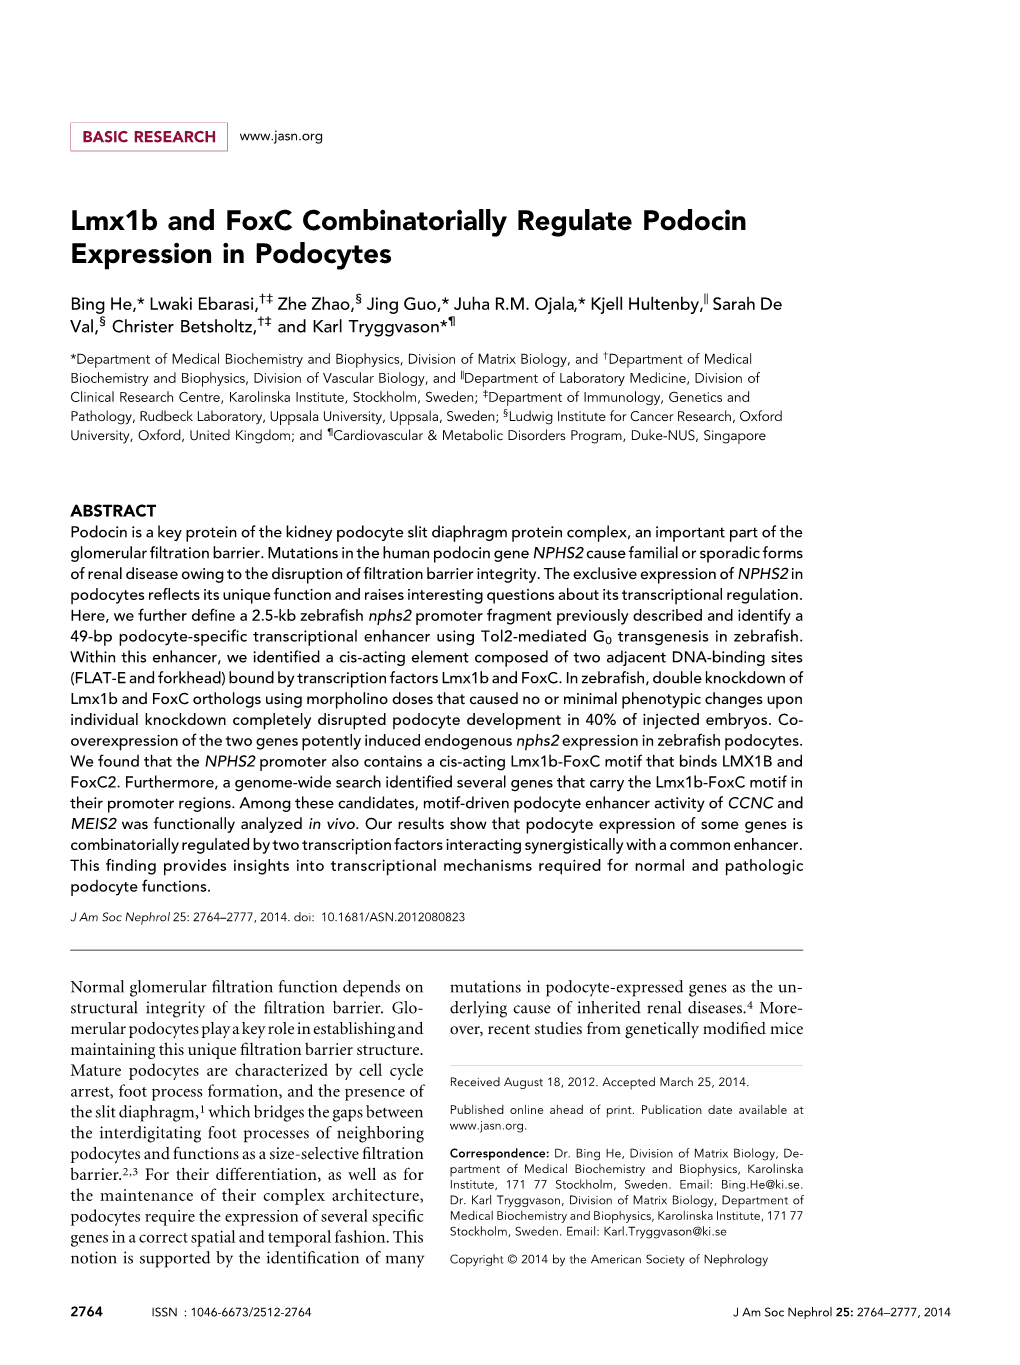 Lmx1b and Foxc Combinatorially Regulate Podocin Expression in Podocytes